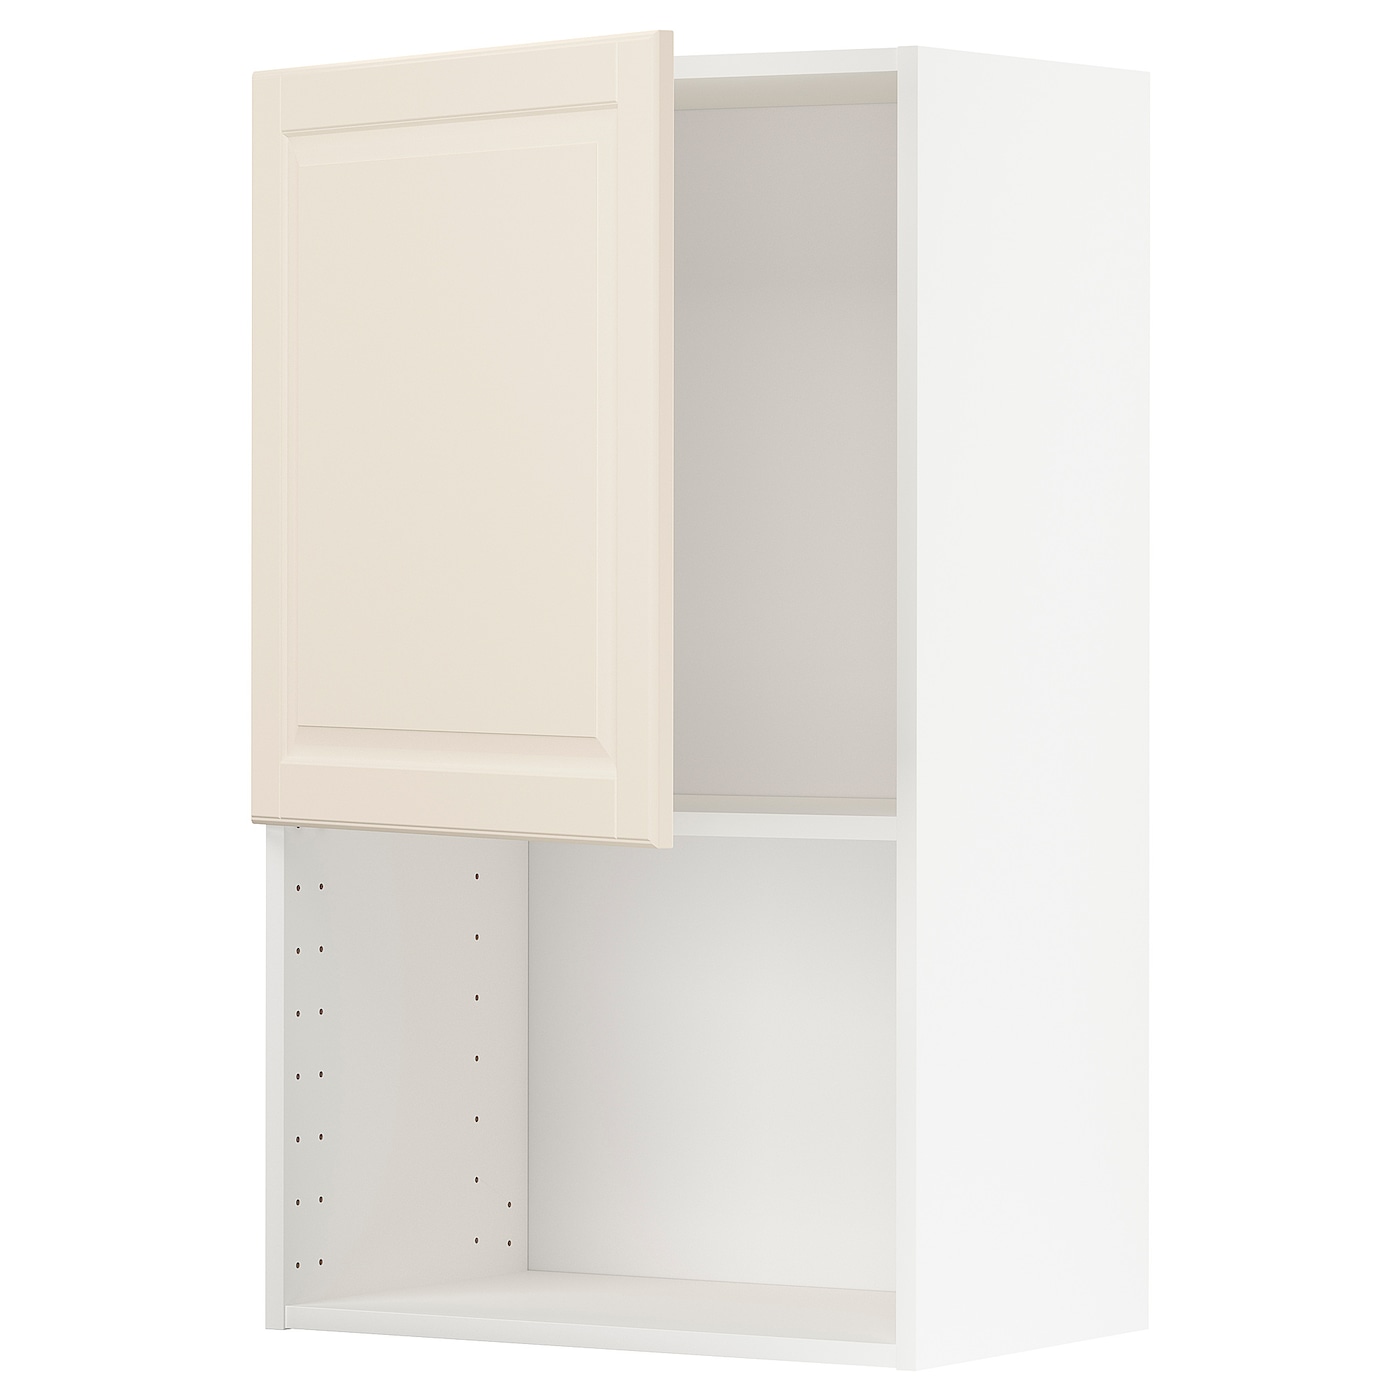 METOD Навесной шкаф - METOD IKEA/ МЕТОД ИКЕА, 100х60 см, белый/кремовый